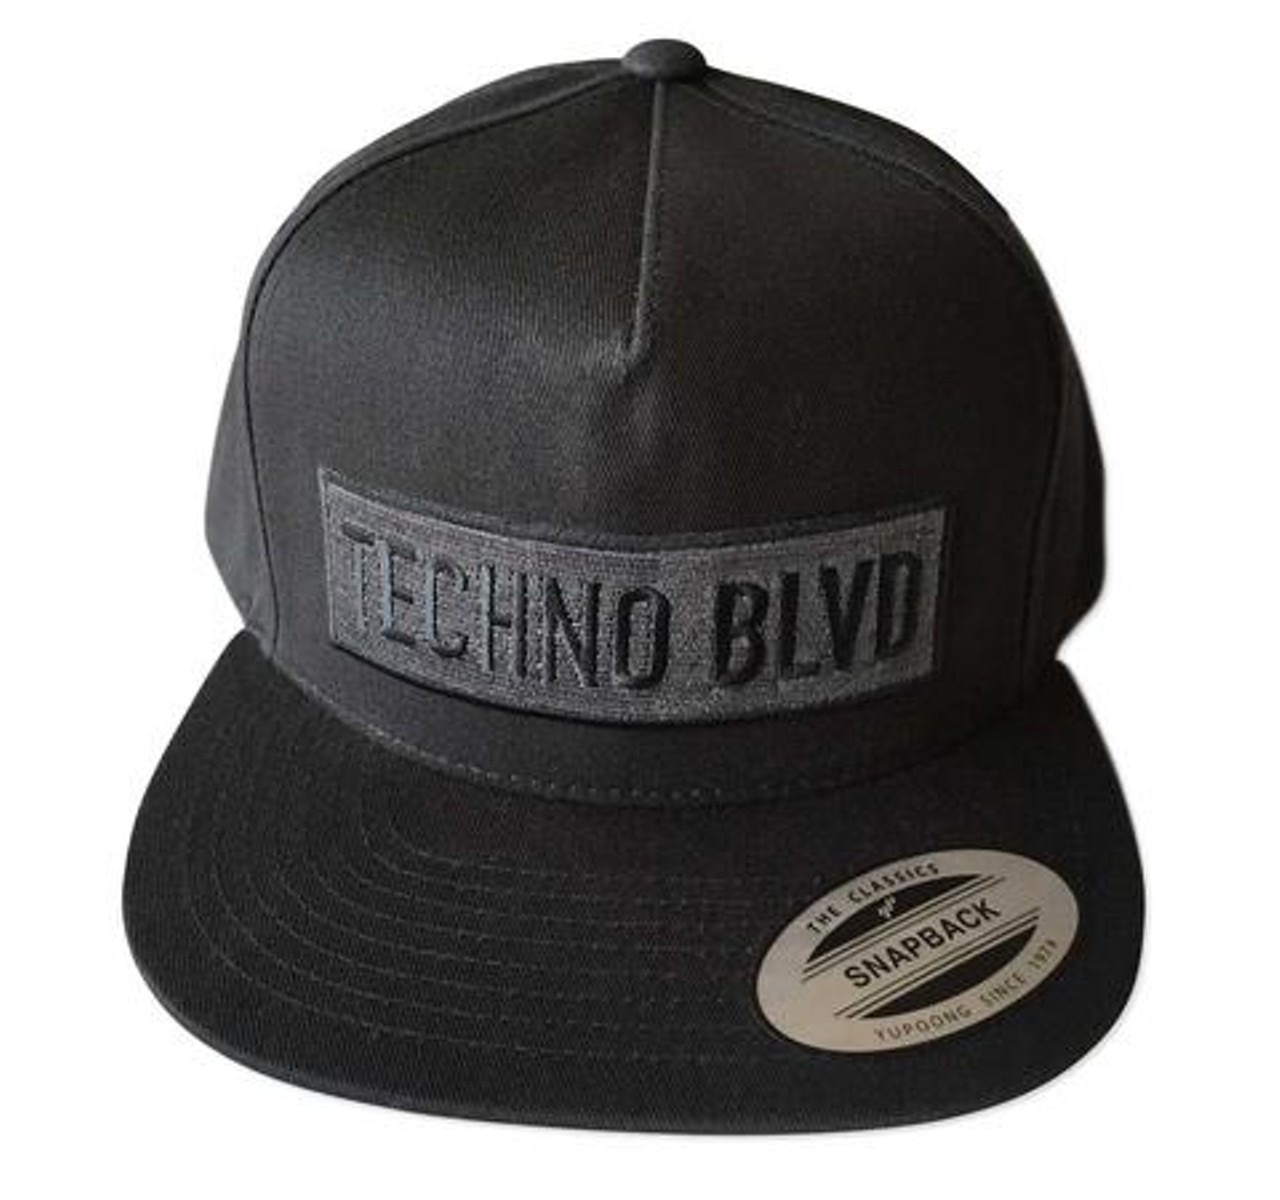 Techno Blvd snapback, $26.